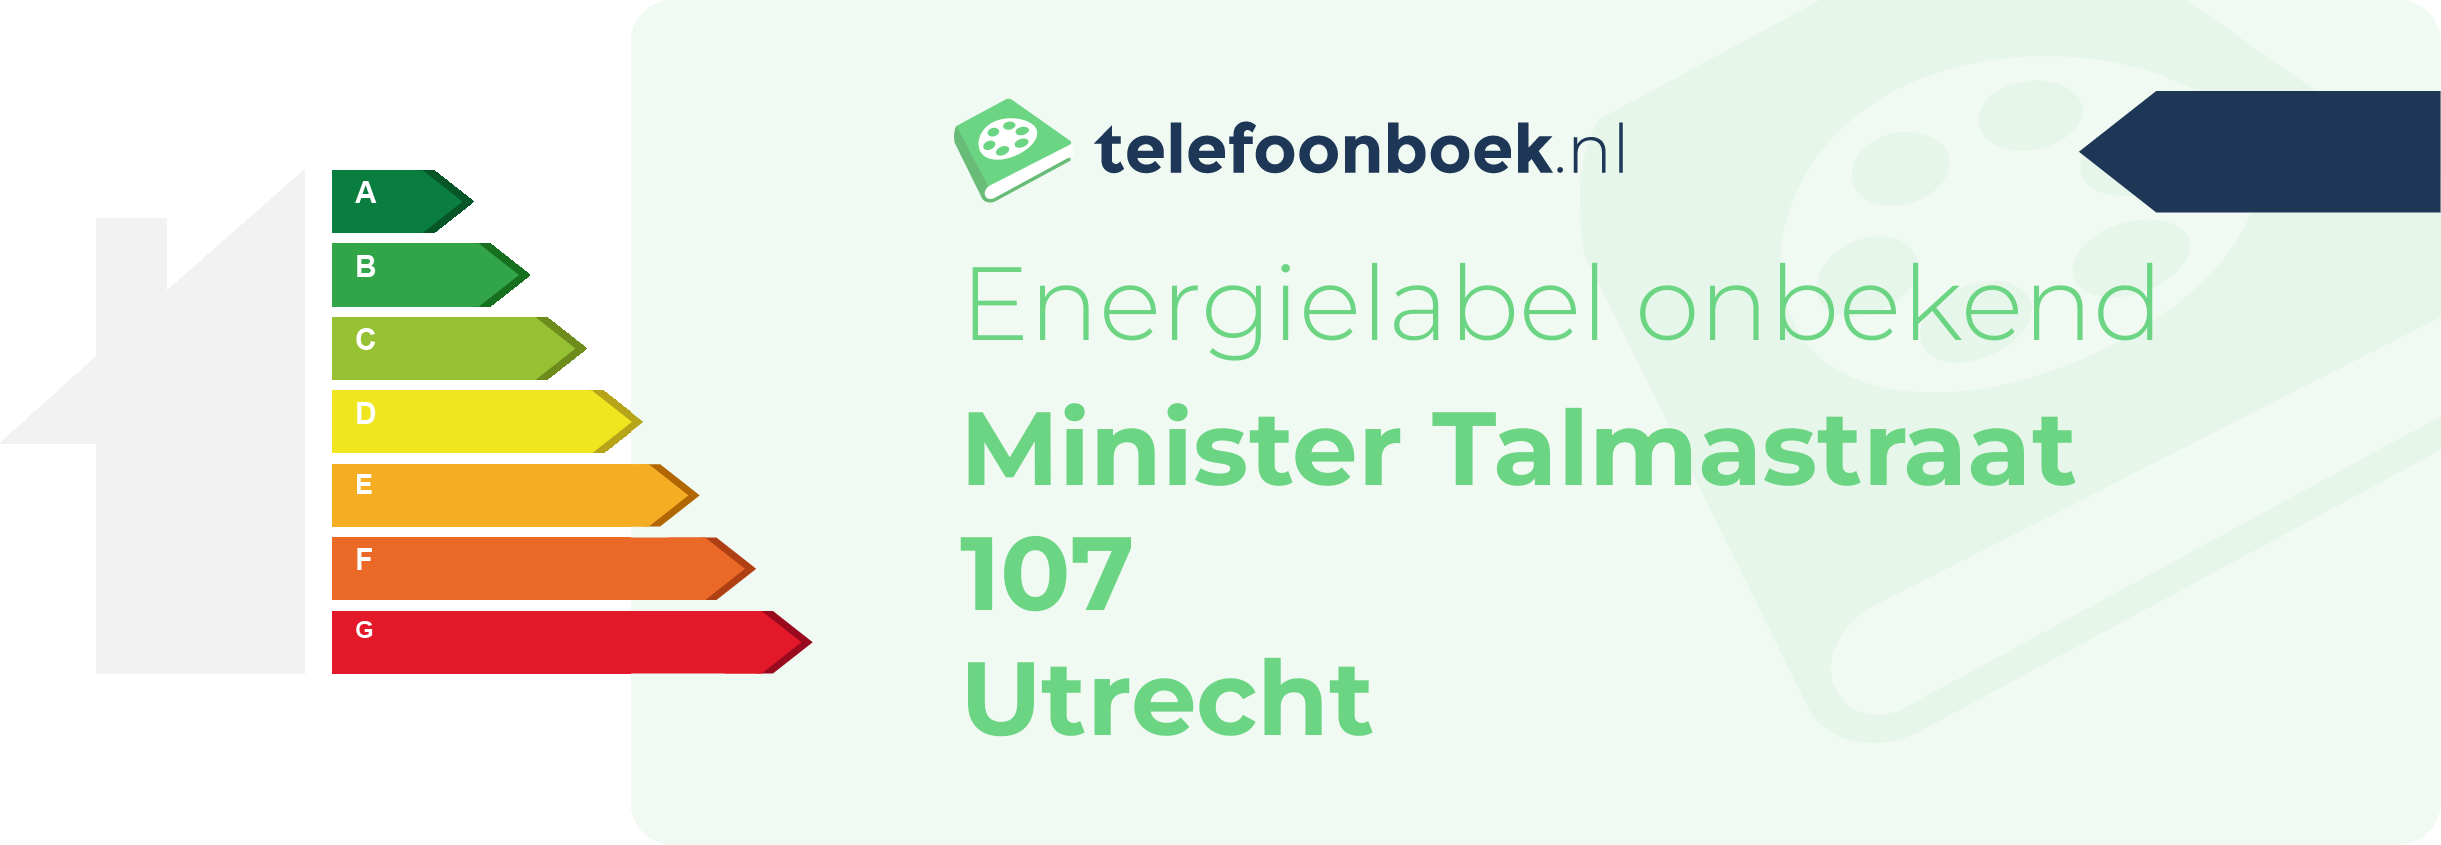 Energielabel Minister Talmastraat 107 Utrecht